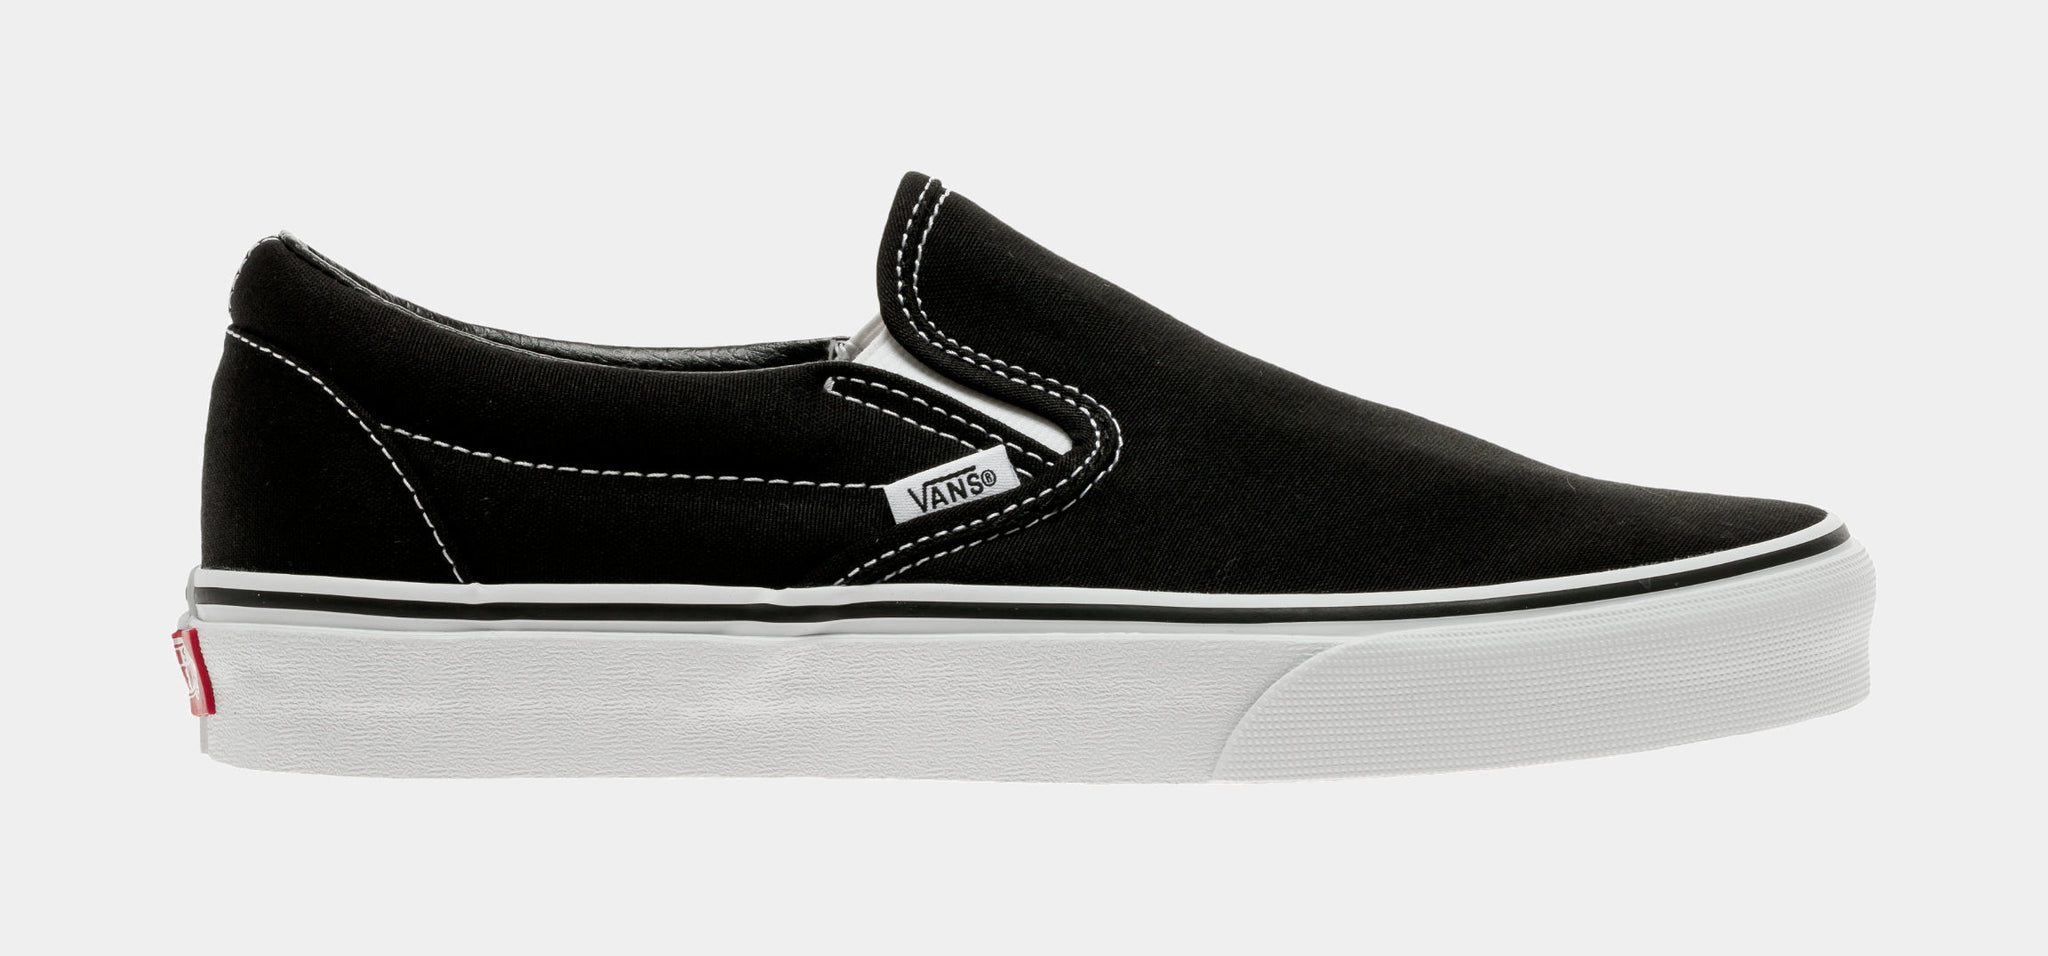 Vans Classic Slip-On Mens Lifestyle Shoe Black EYEBLK – Shoe Palace